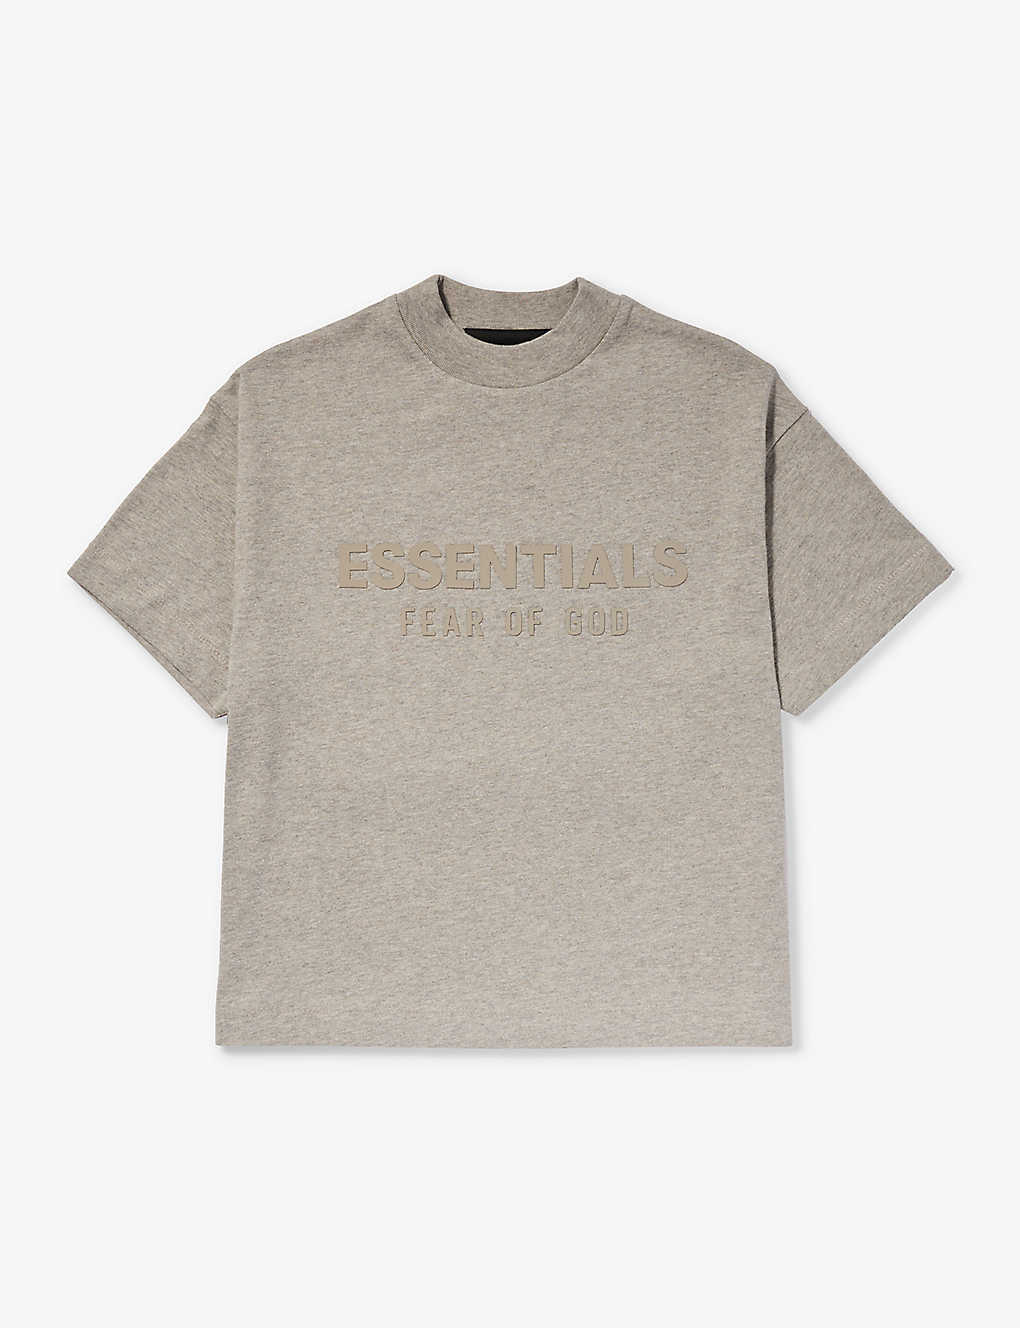 Essentials Fear Of God  Boys Dark Heather Oatmeal Kids Brand-print Relaxed-fit Cotton-jersey T-shirt